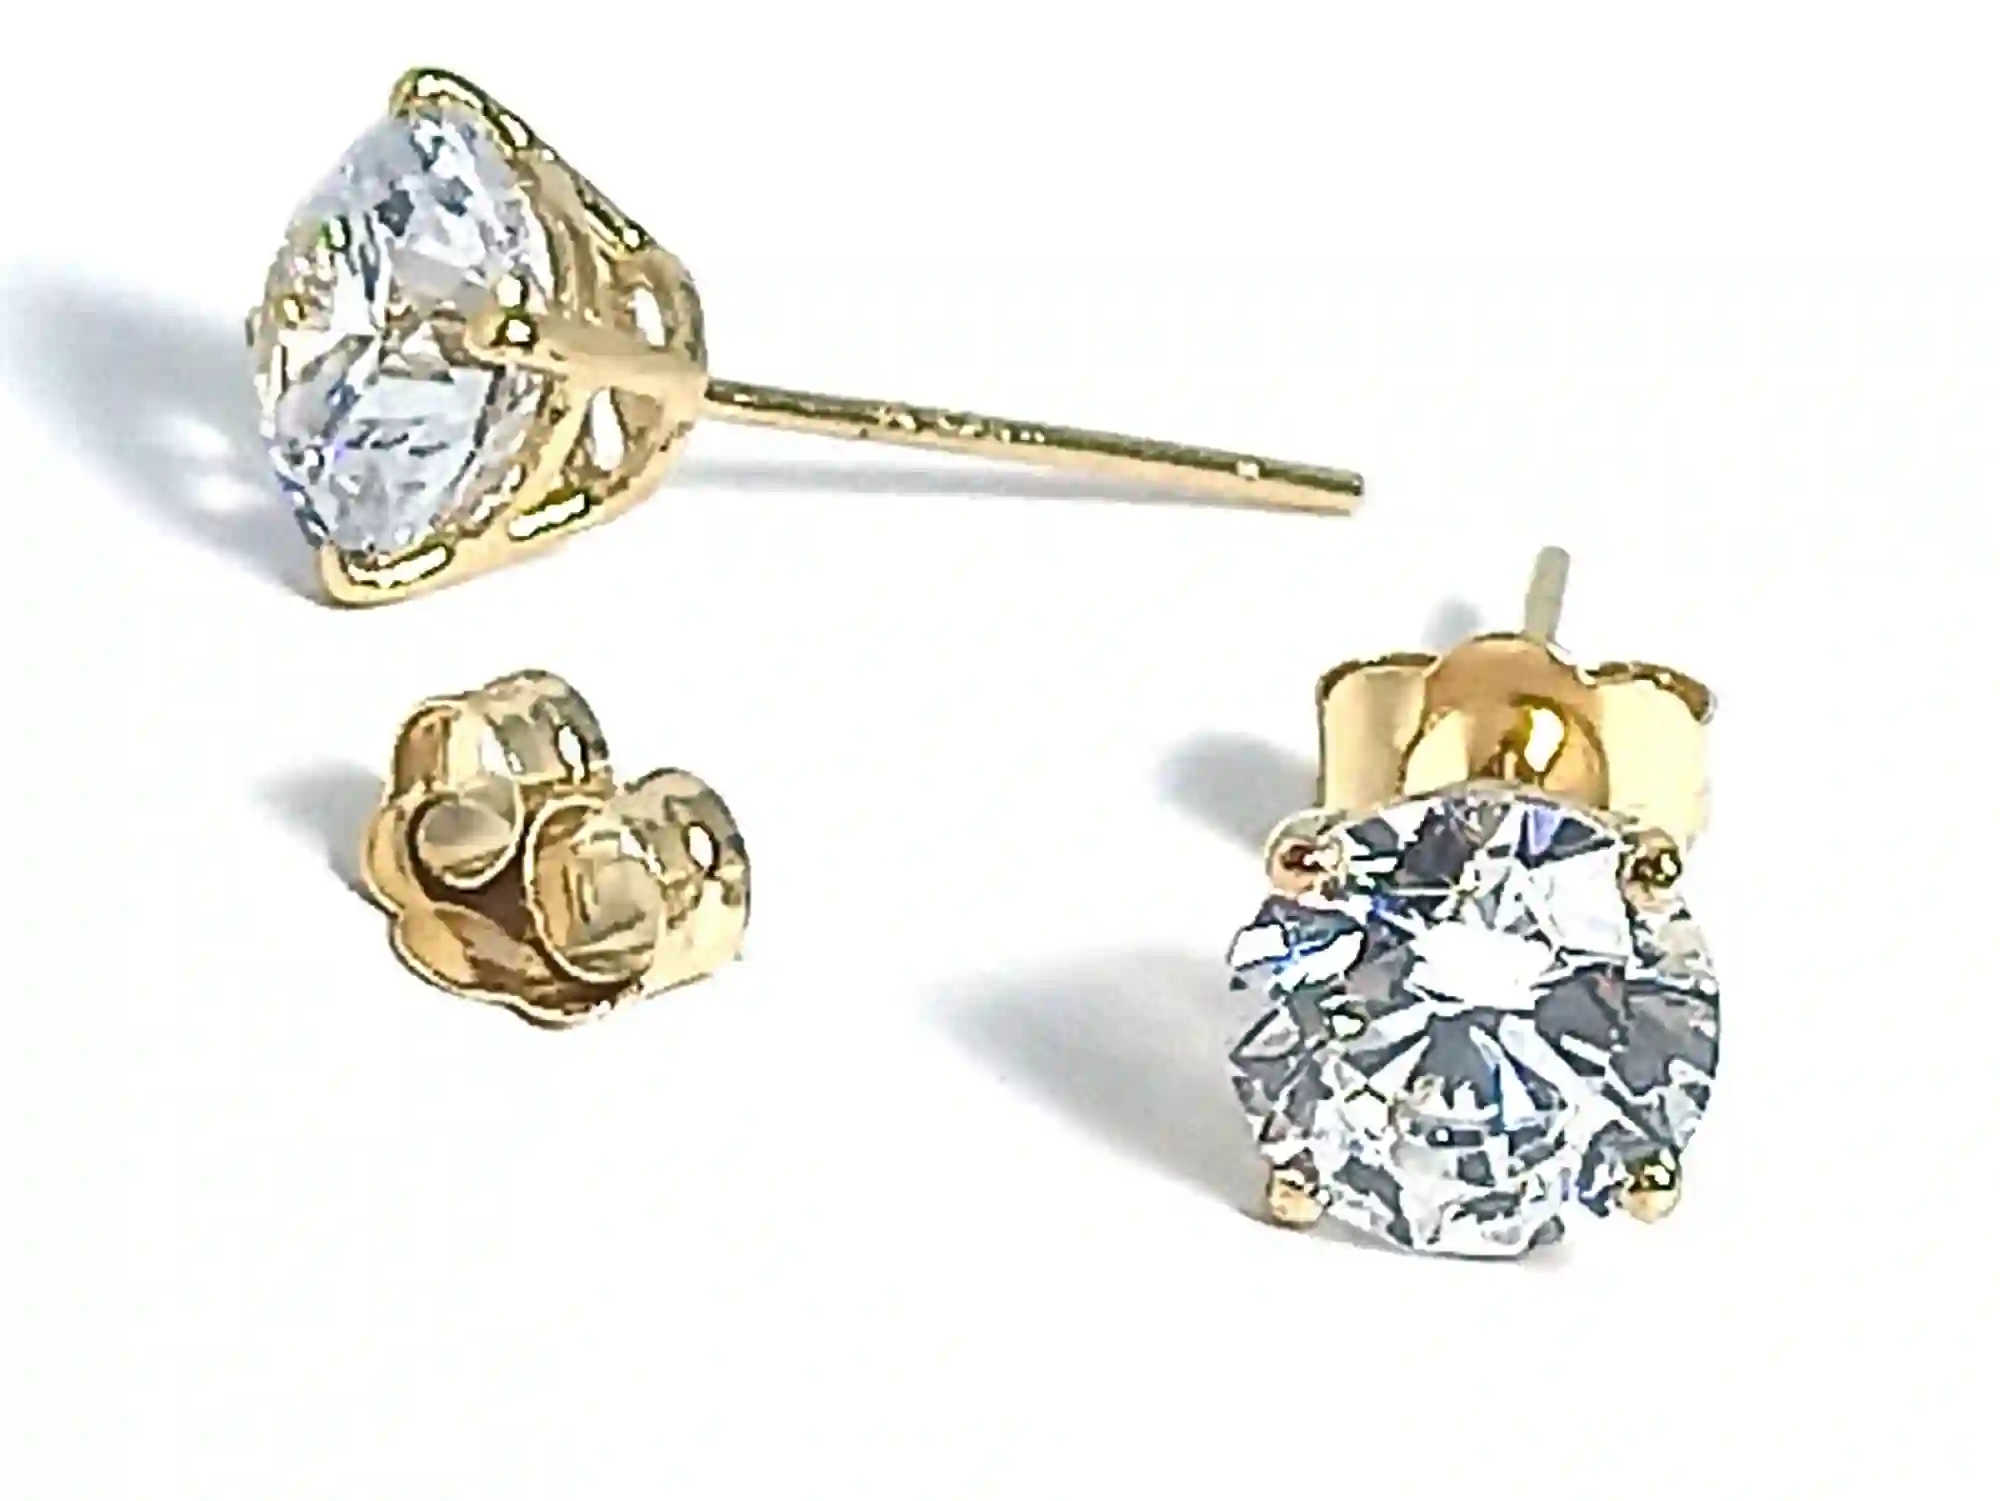 Diamond Stud Earrings - 2 Carat Total Weight Diamond Earrings 18k SOLID GOLD Round SOLITAIRE 4 Prong 6.5MM Stud earrings - Luxury Valentines 